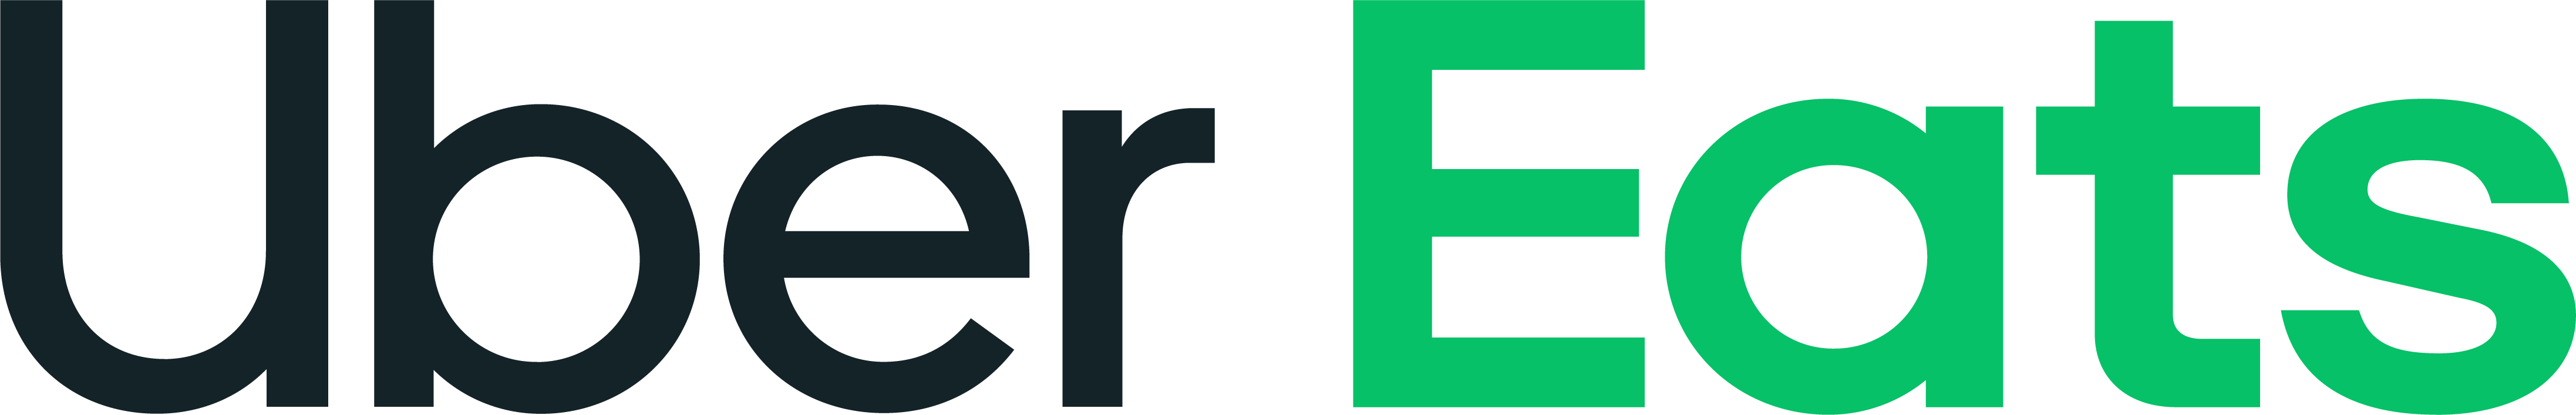 UberEats ロゴ画像